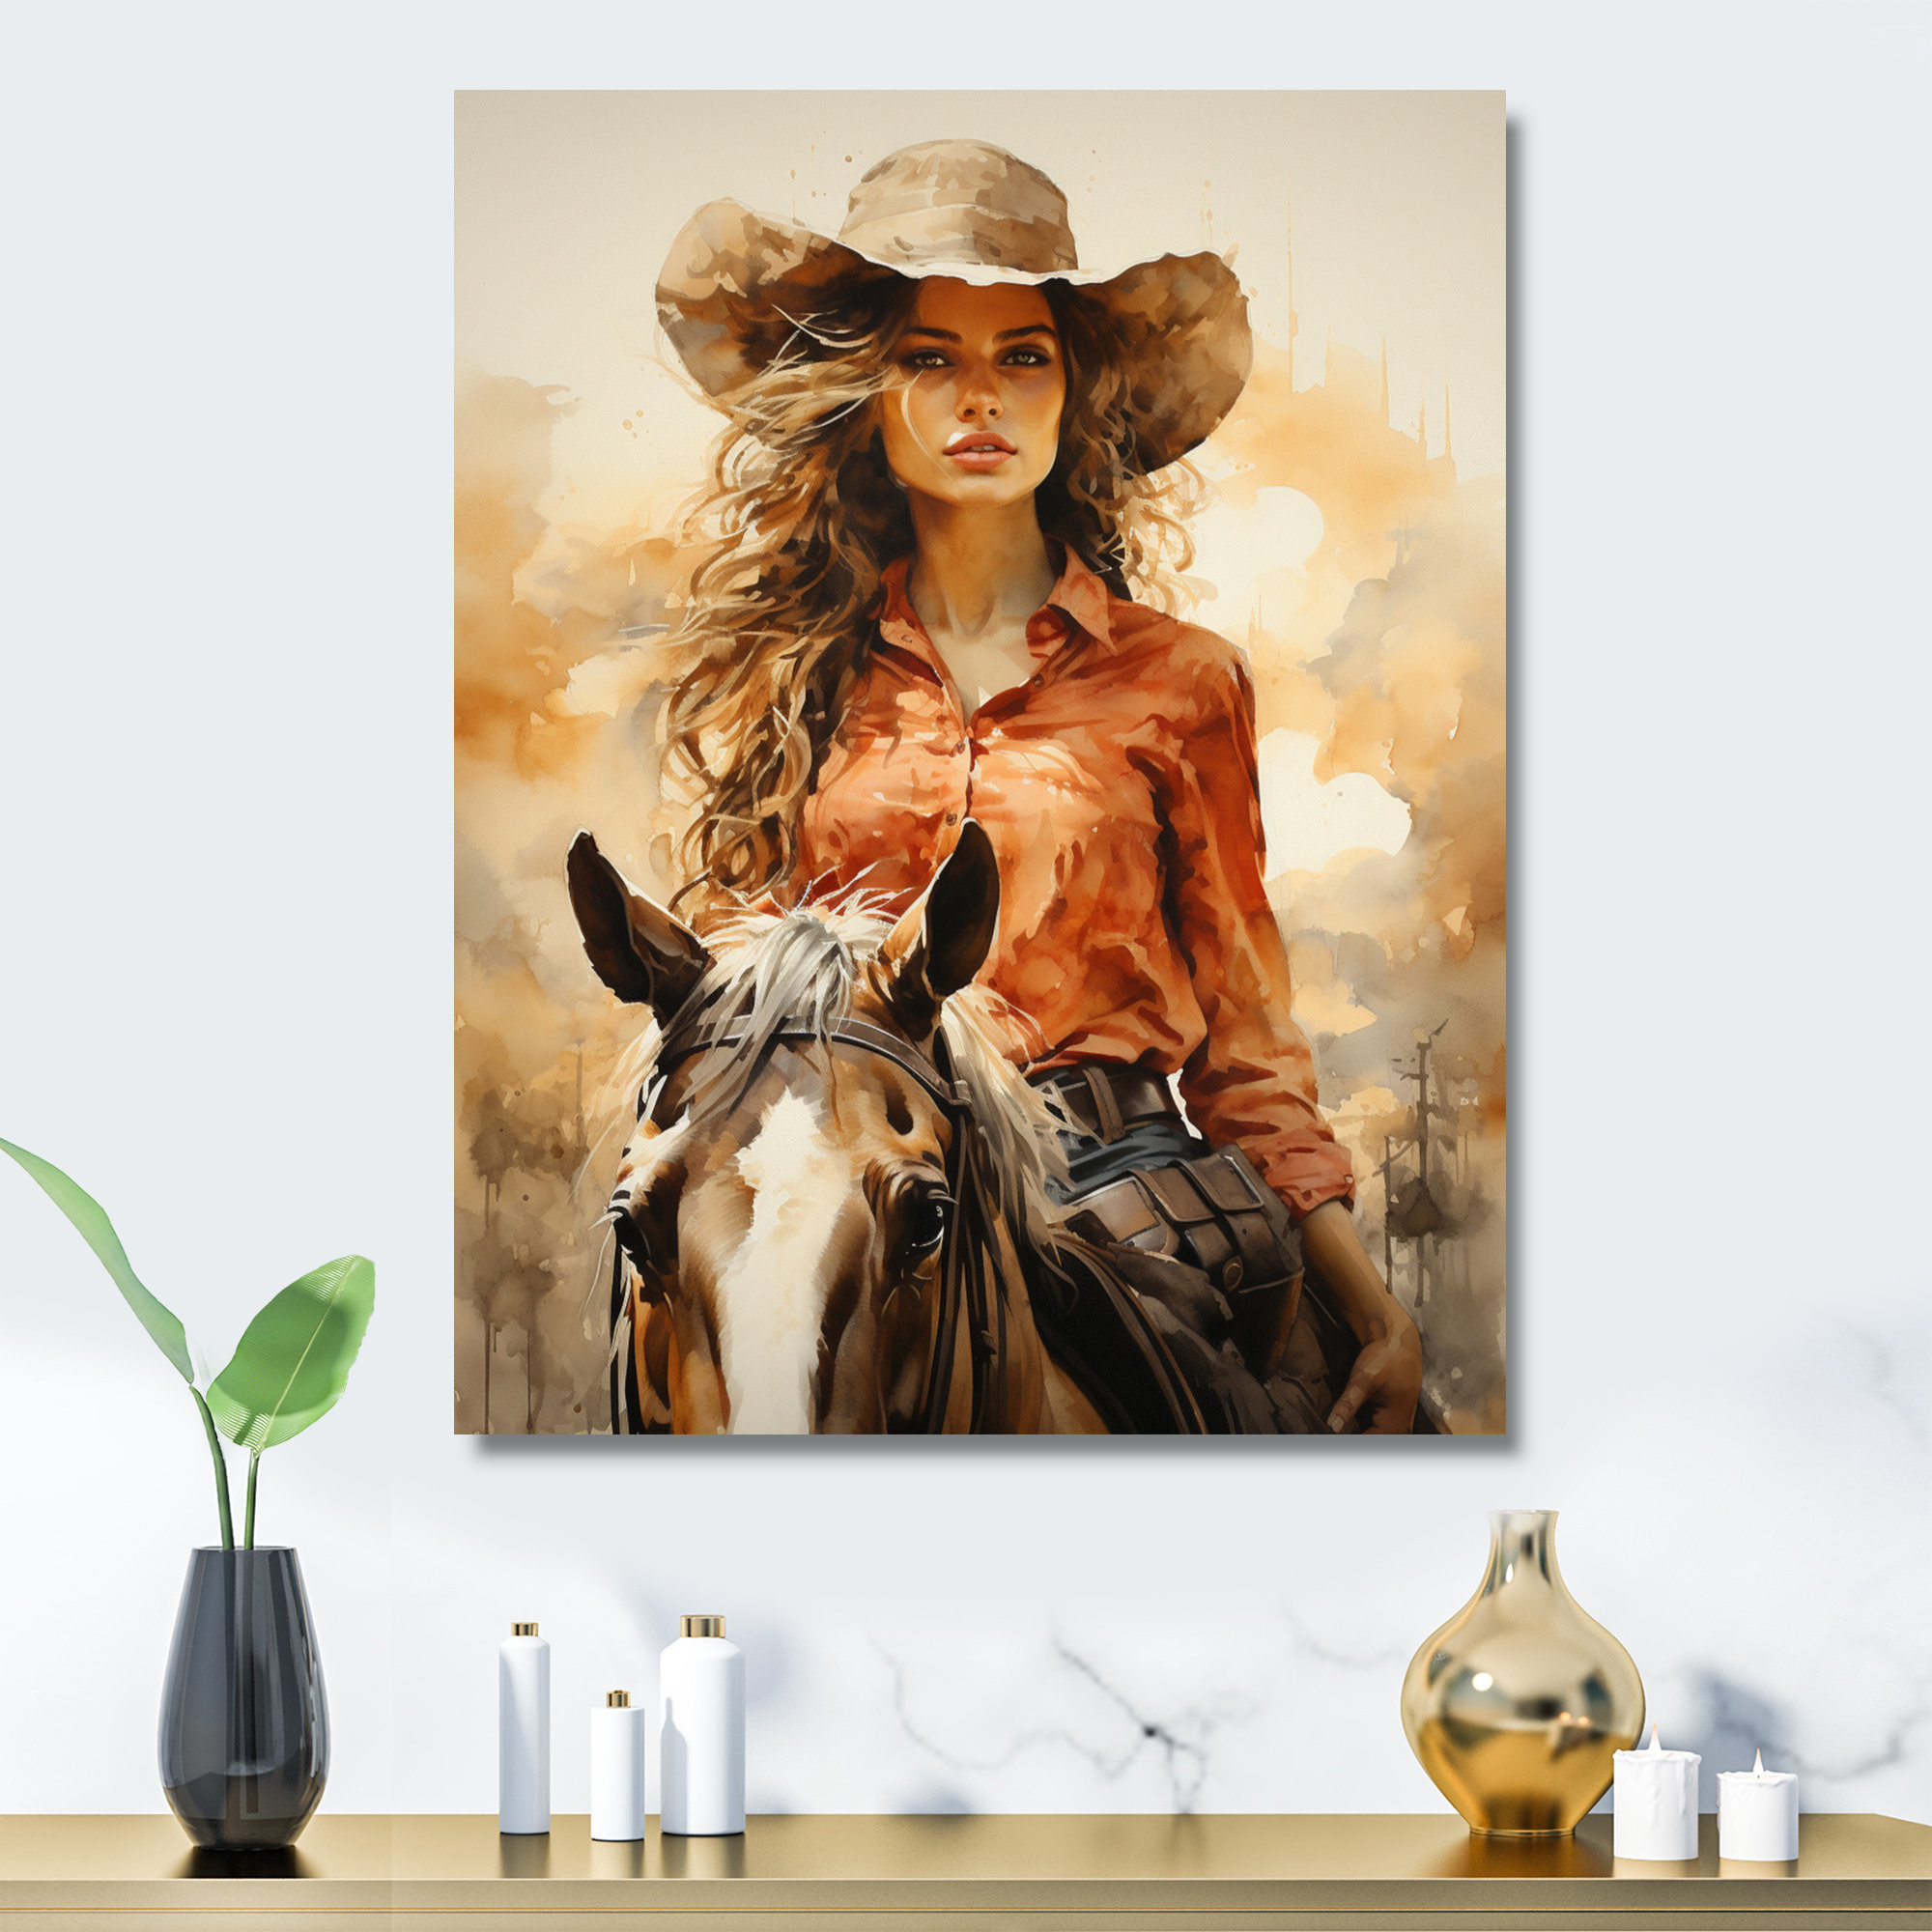 Cowboy Sunset Roundup Cowboys - Cowboys Metal Wall Art Prints Red Barrel Studio Size: 40 H x 30 W x 1 D